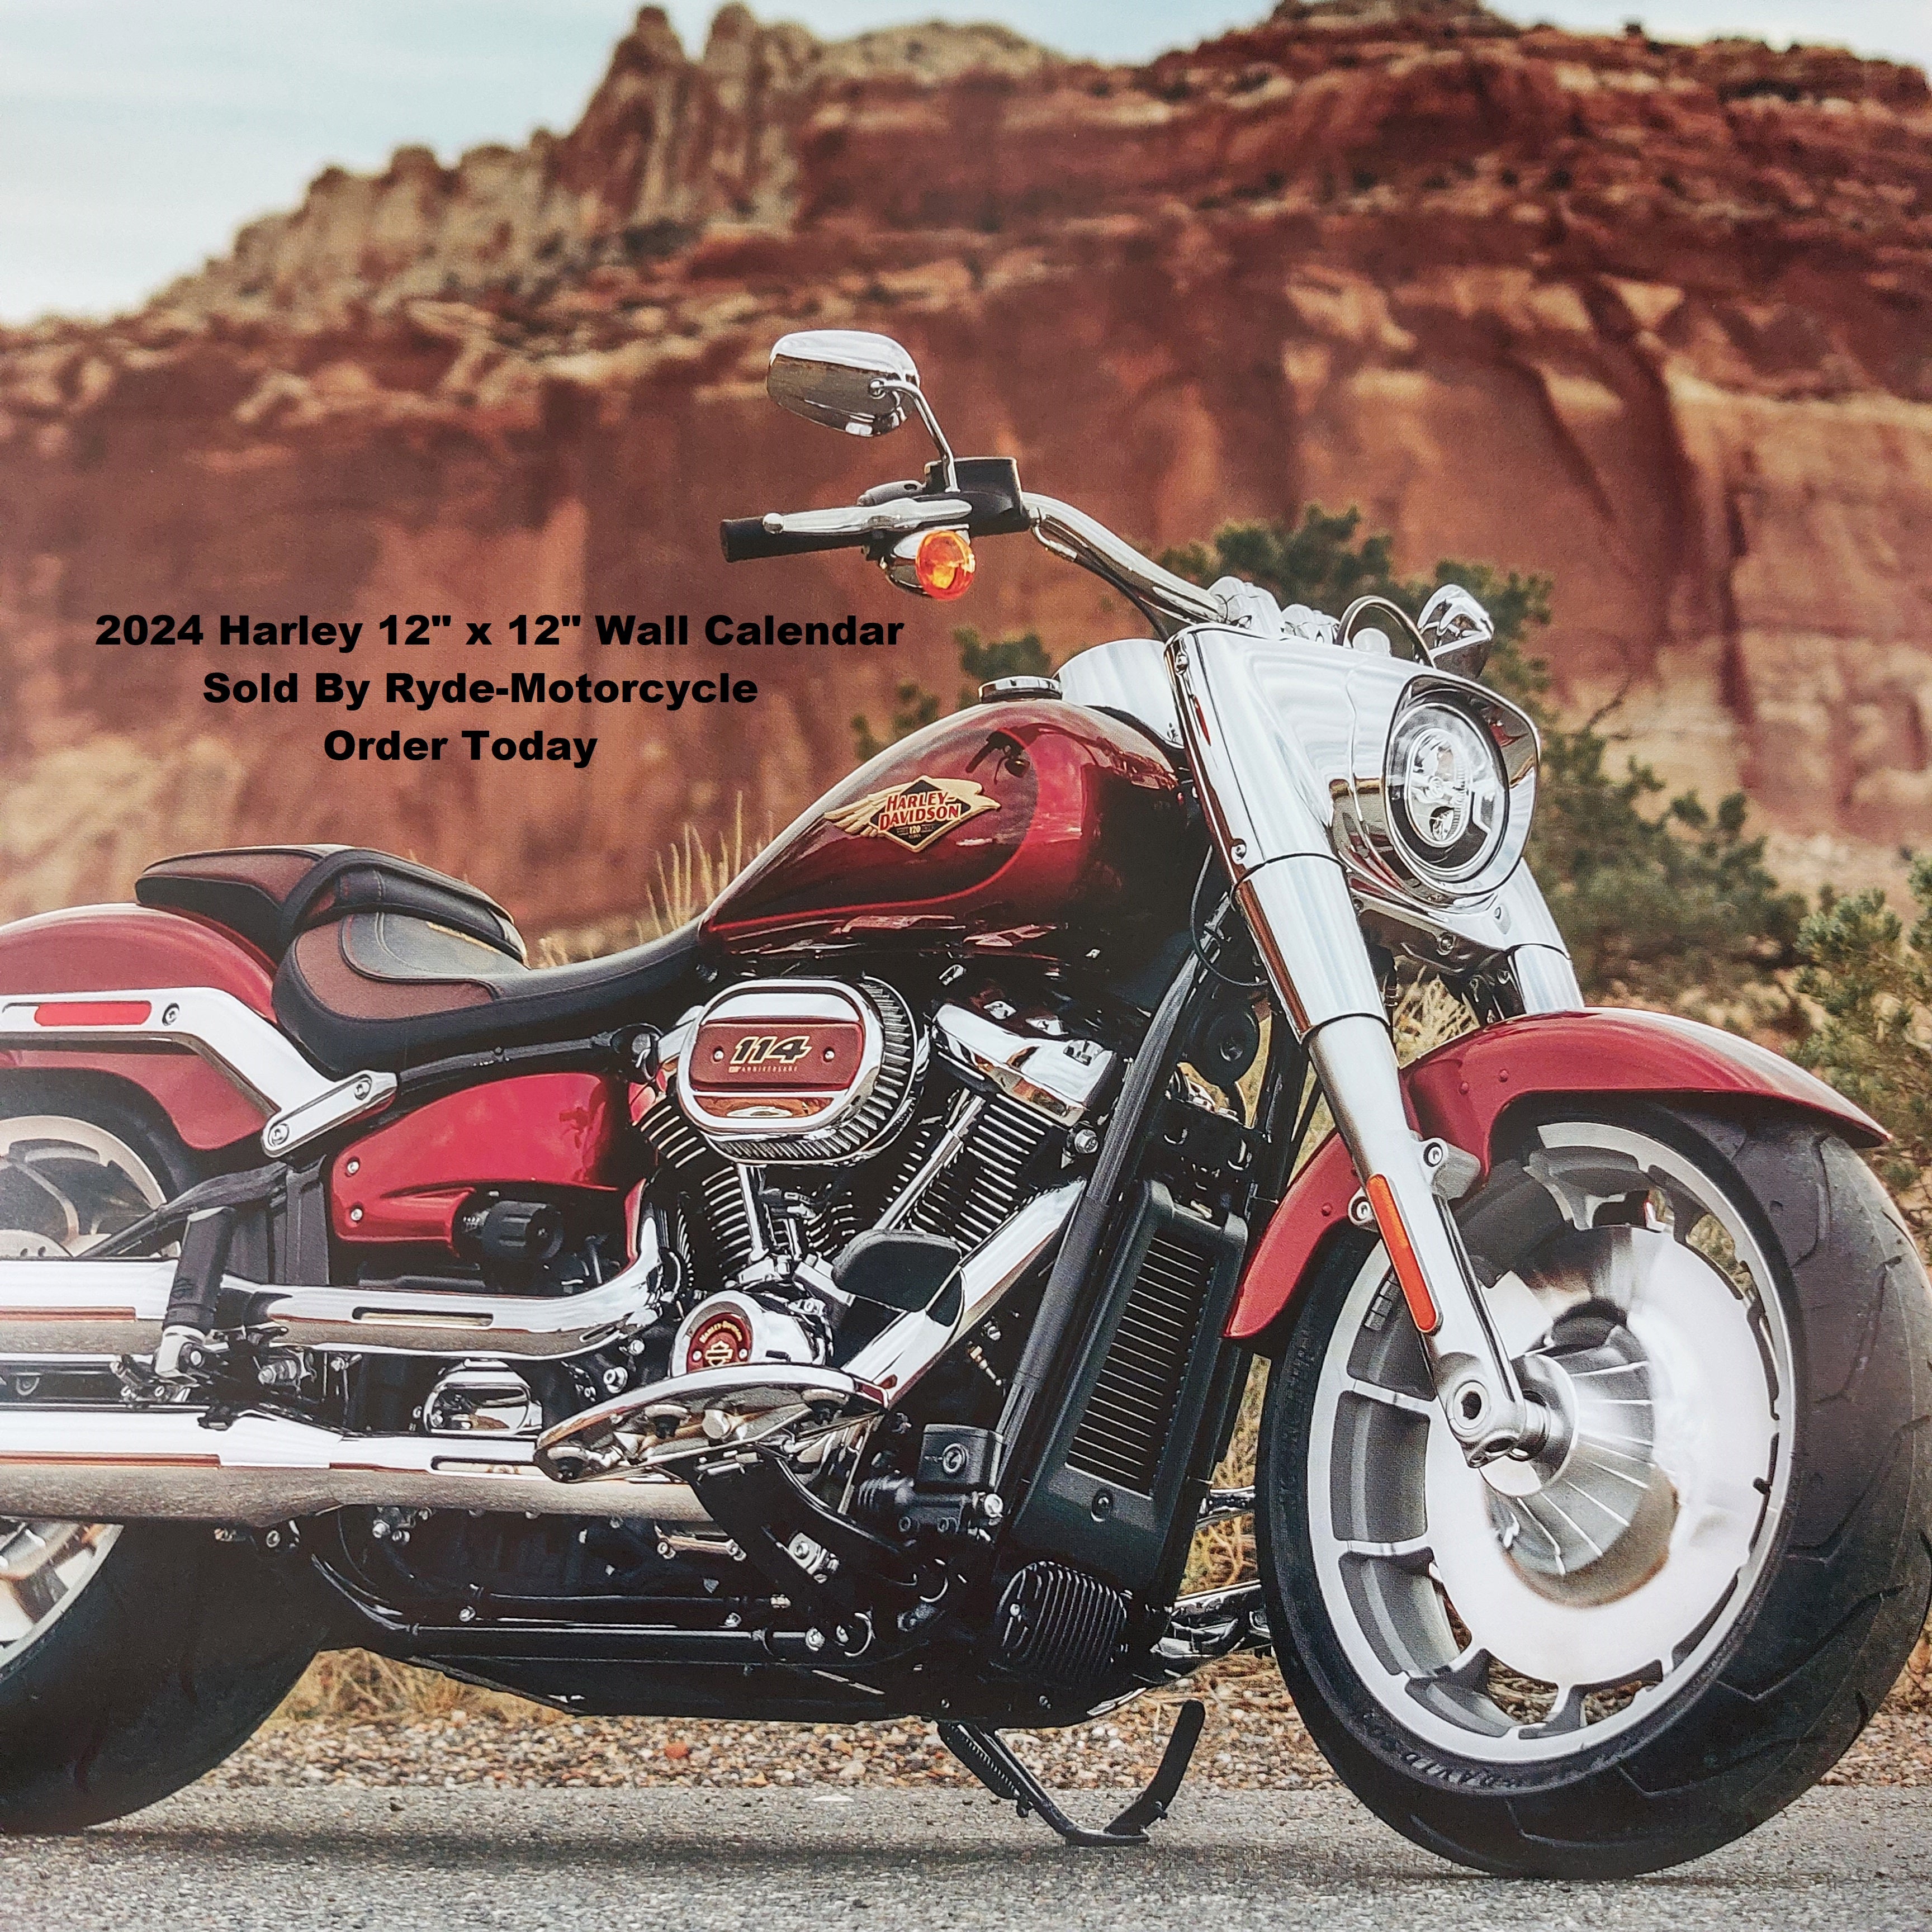 2024 Harley Wall Calendar 12 X 12